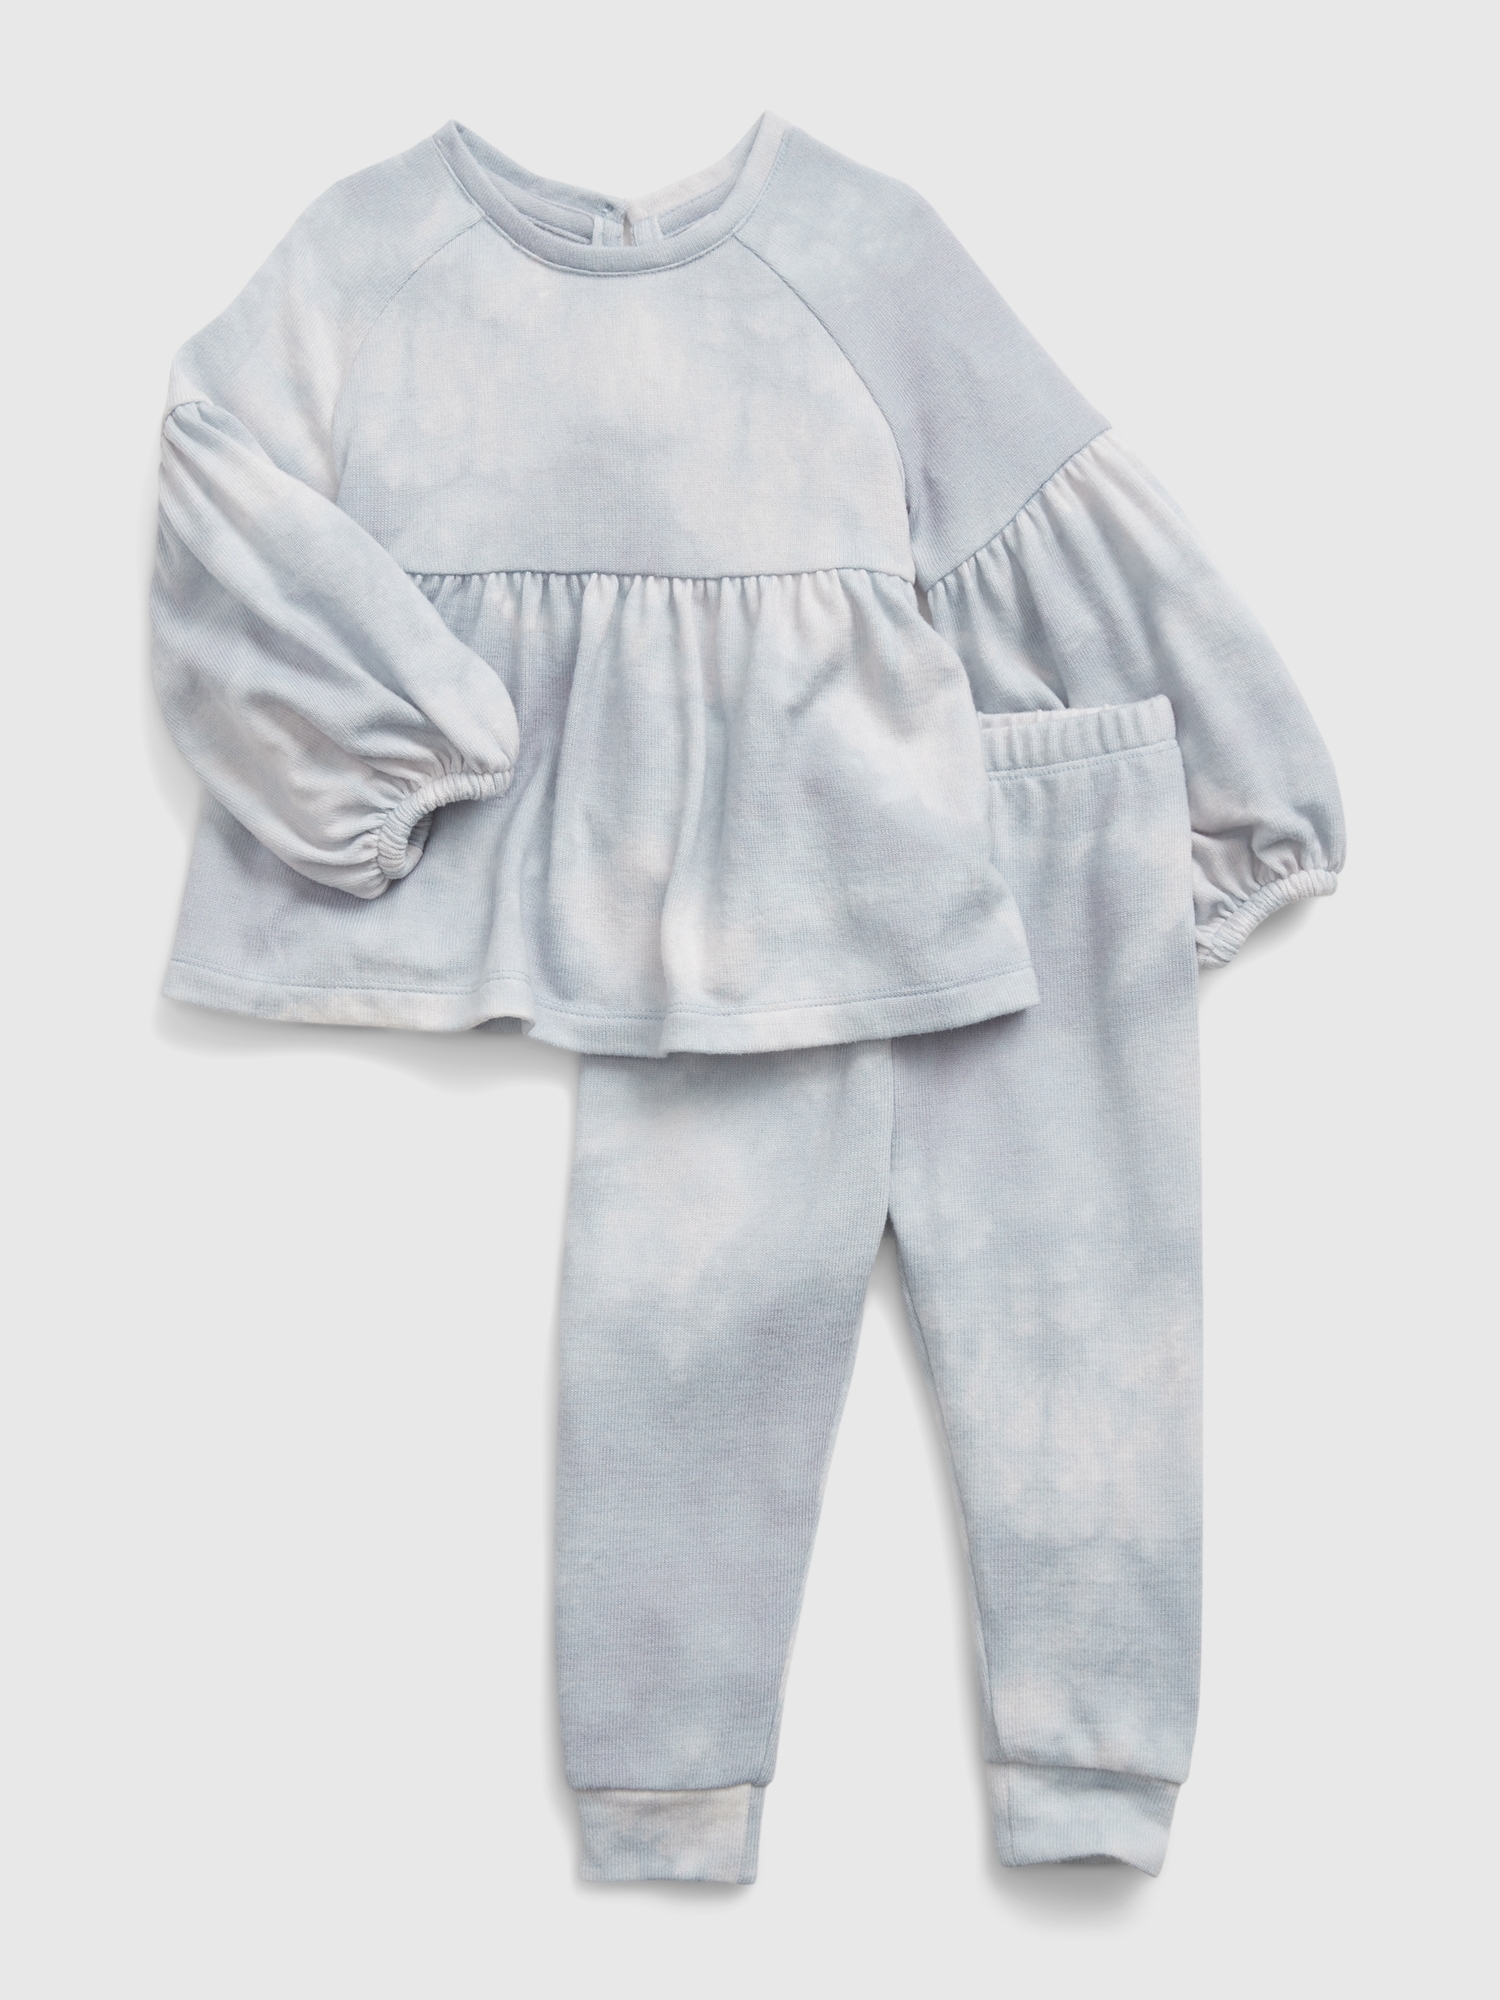 Baby Softspun Tie-Dye Outfit Set